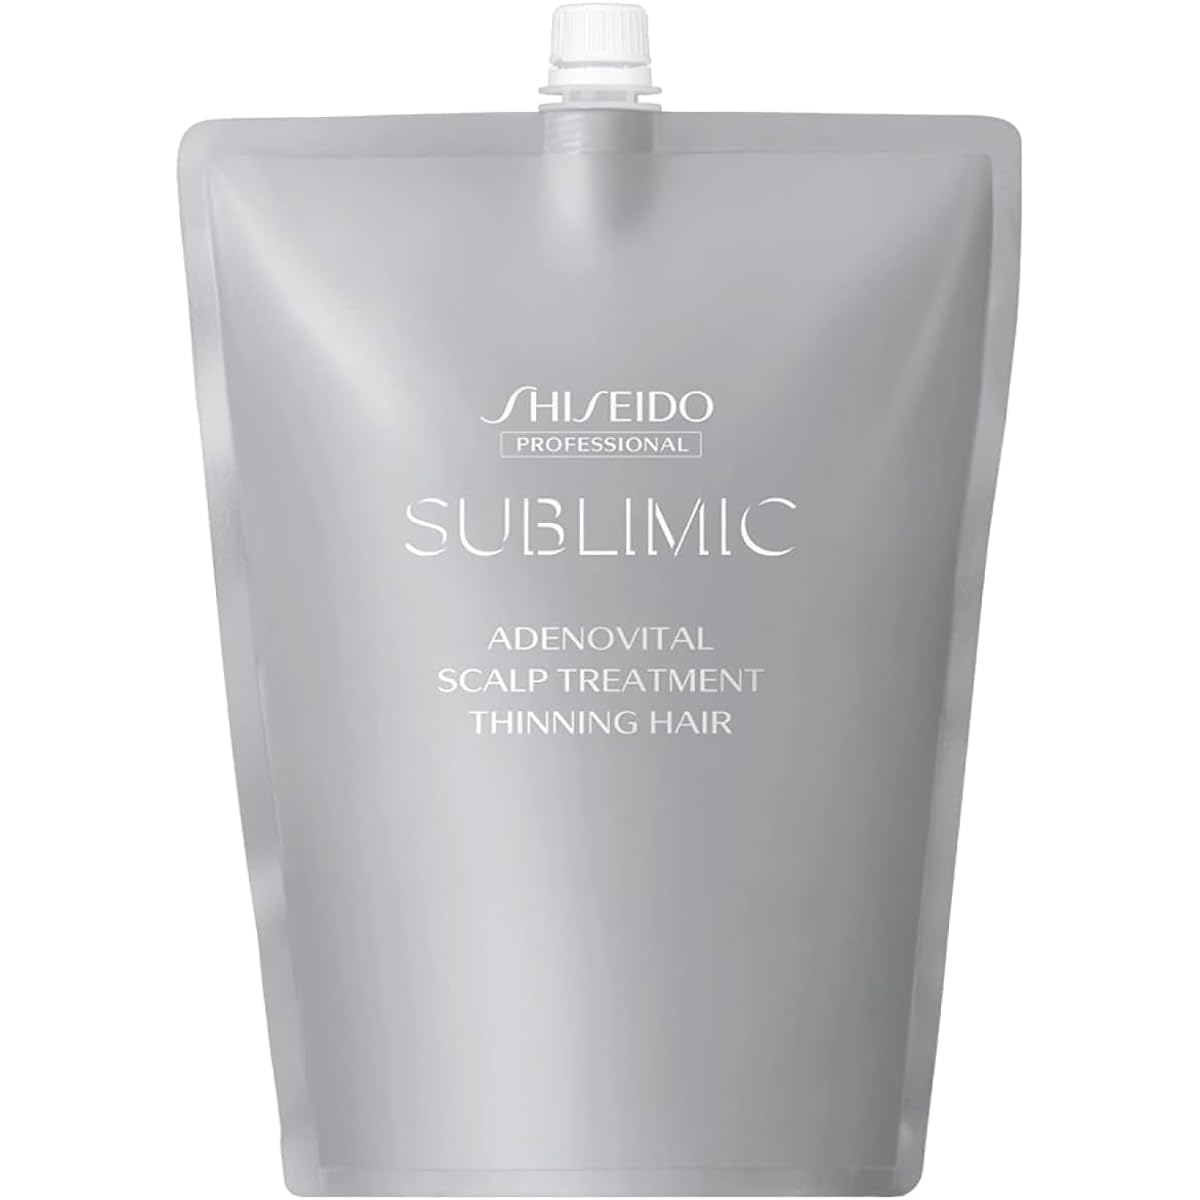 Shiseido Pro Sublimic Adenovital Hair Treatment 1800g Refill